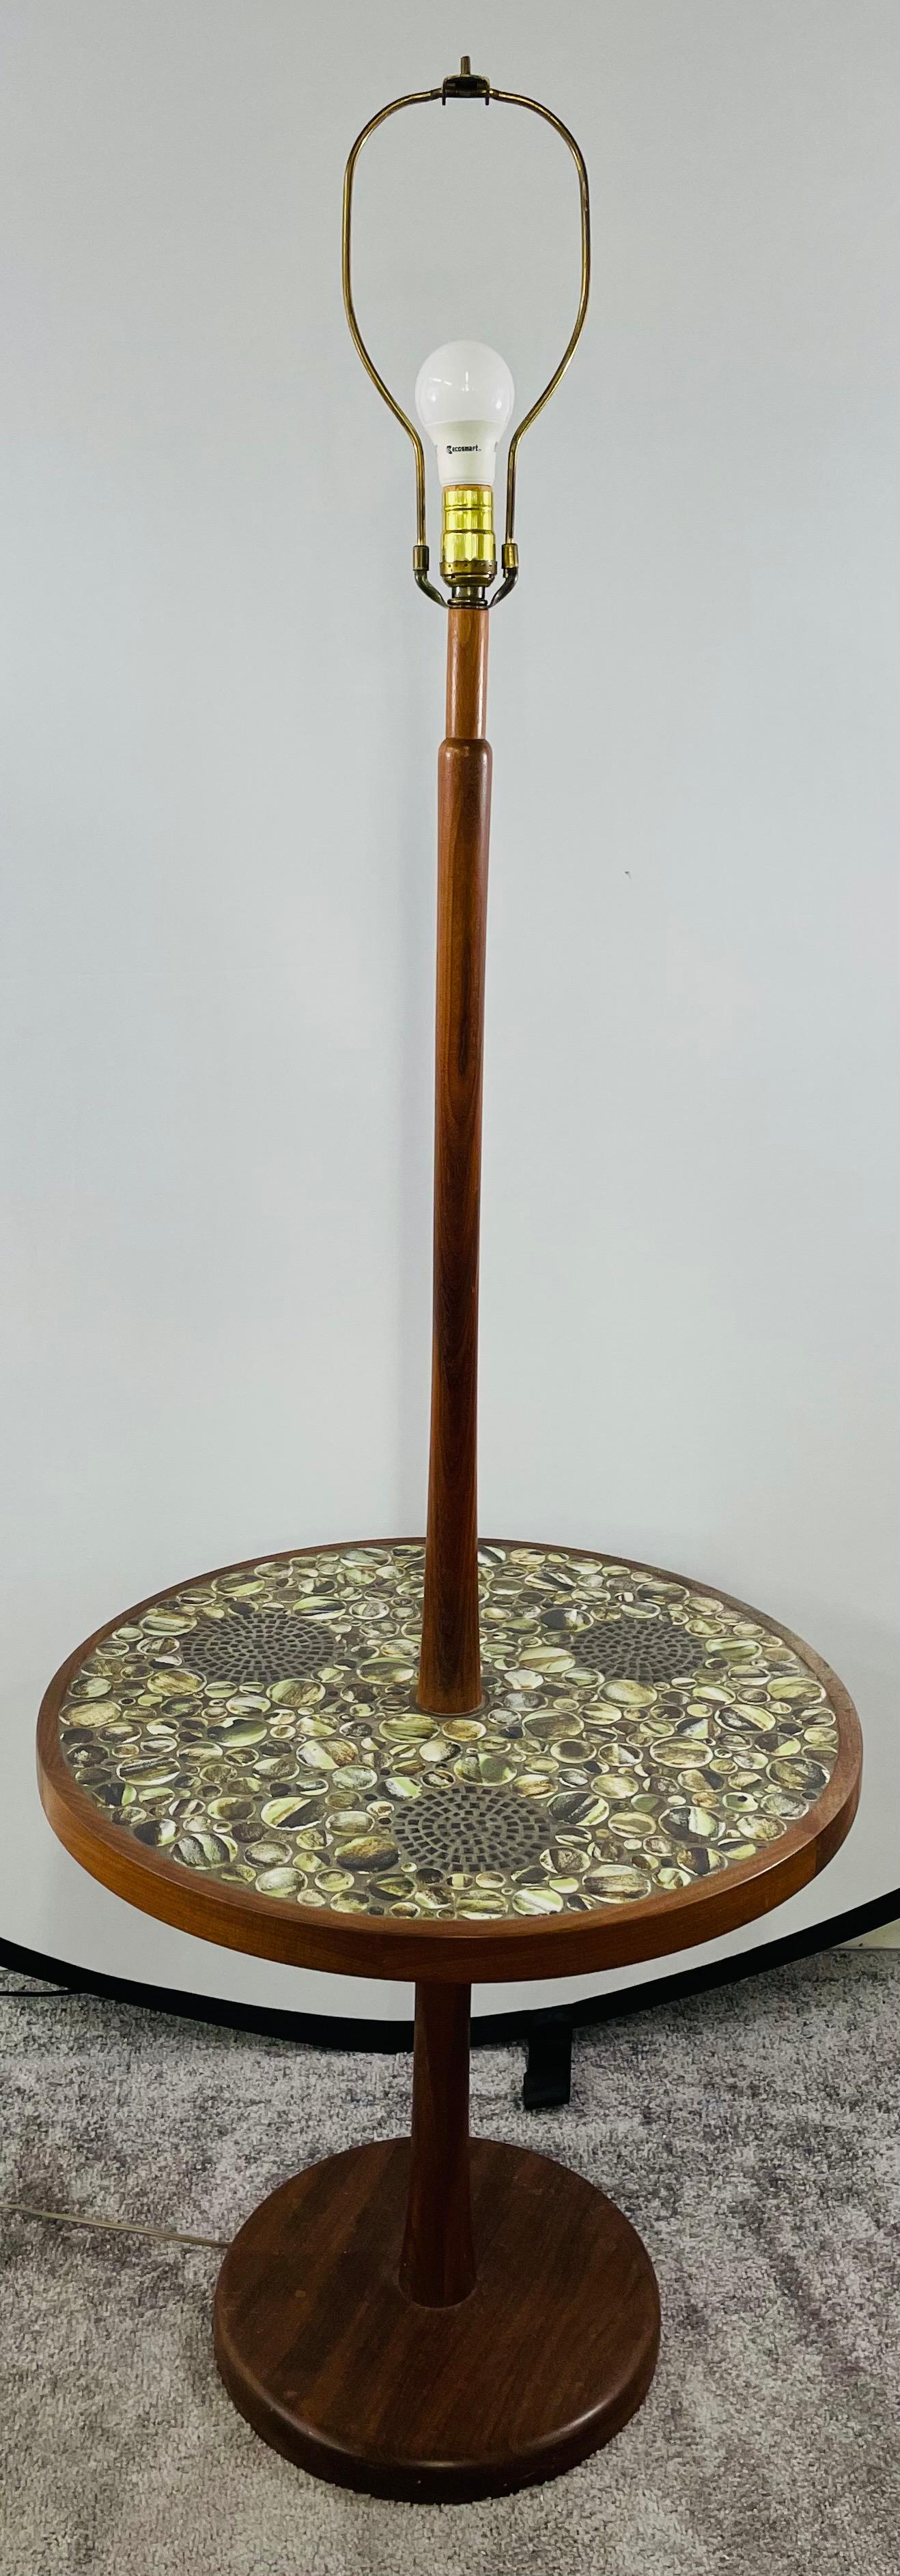 Stone Gordon & Jane Martz Mid-Century Modern Floor Lamp / End Table